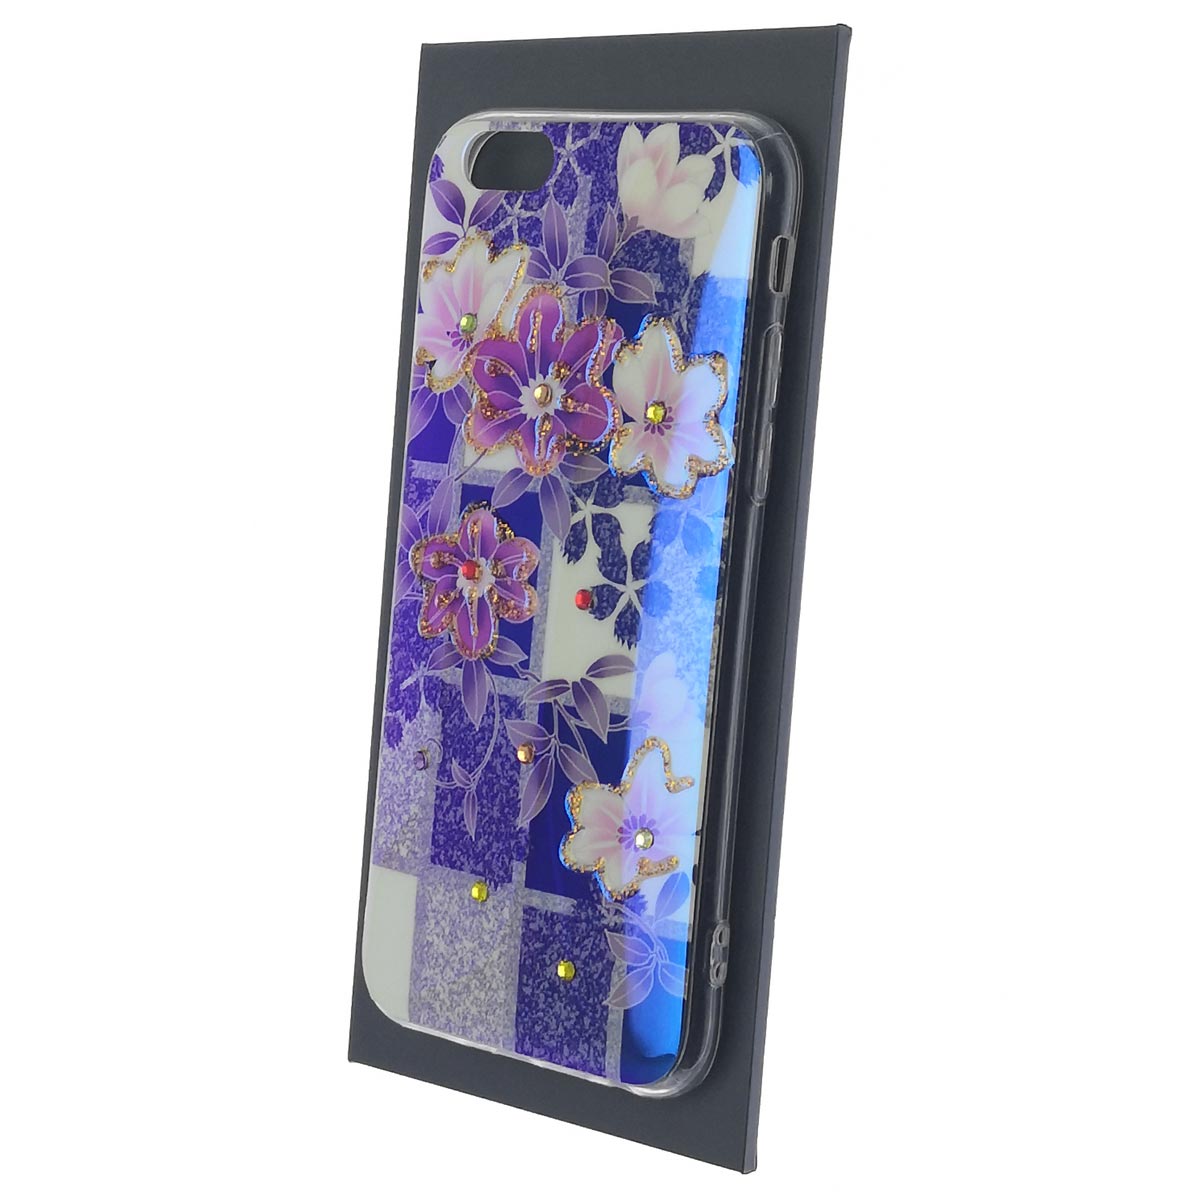 Чехол накладка для APPLE iPhone 6, iPhone 6G, iPhone 6S, силикон, со стразами 3D, рисунок Цветочки